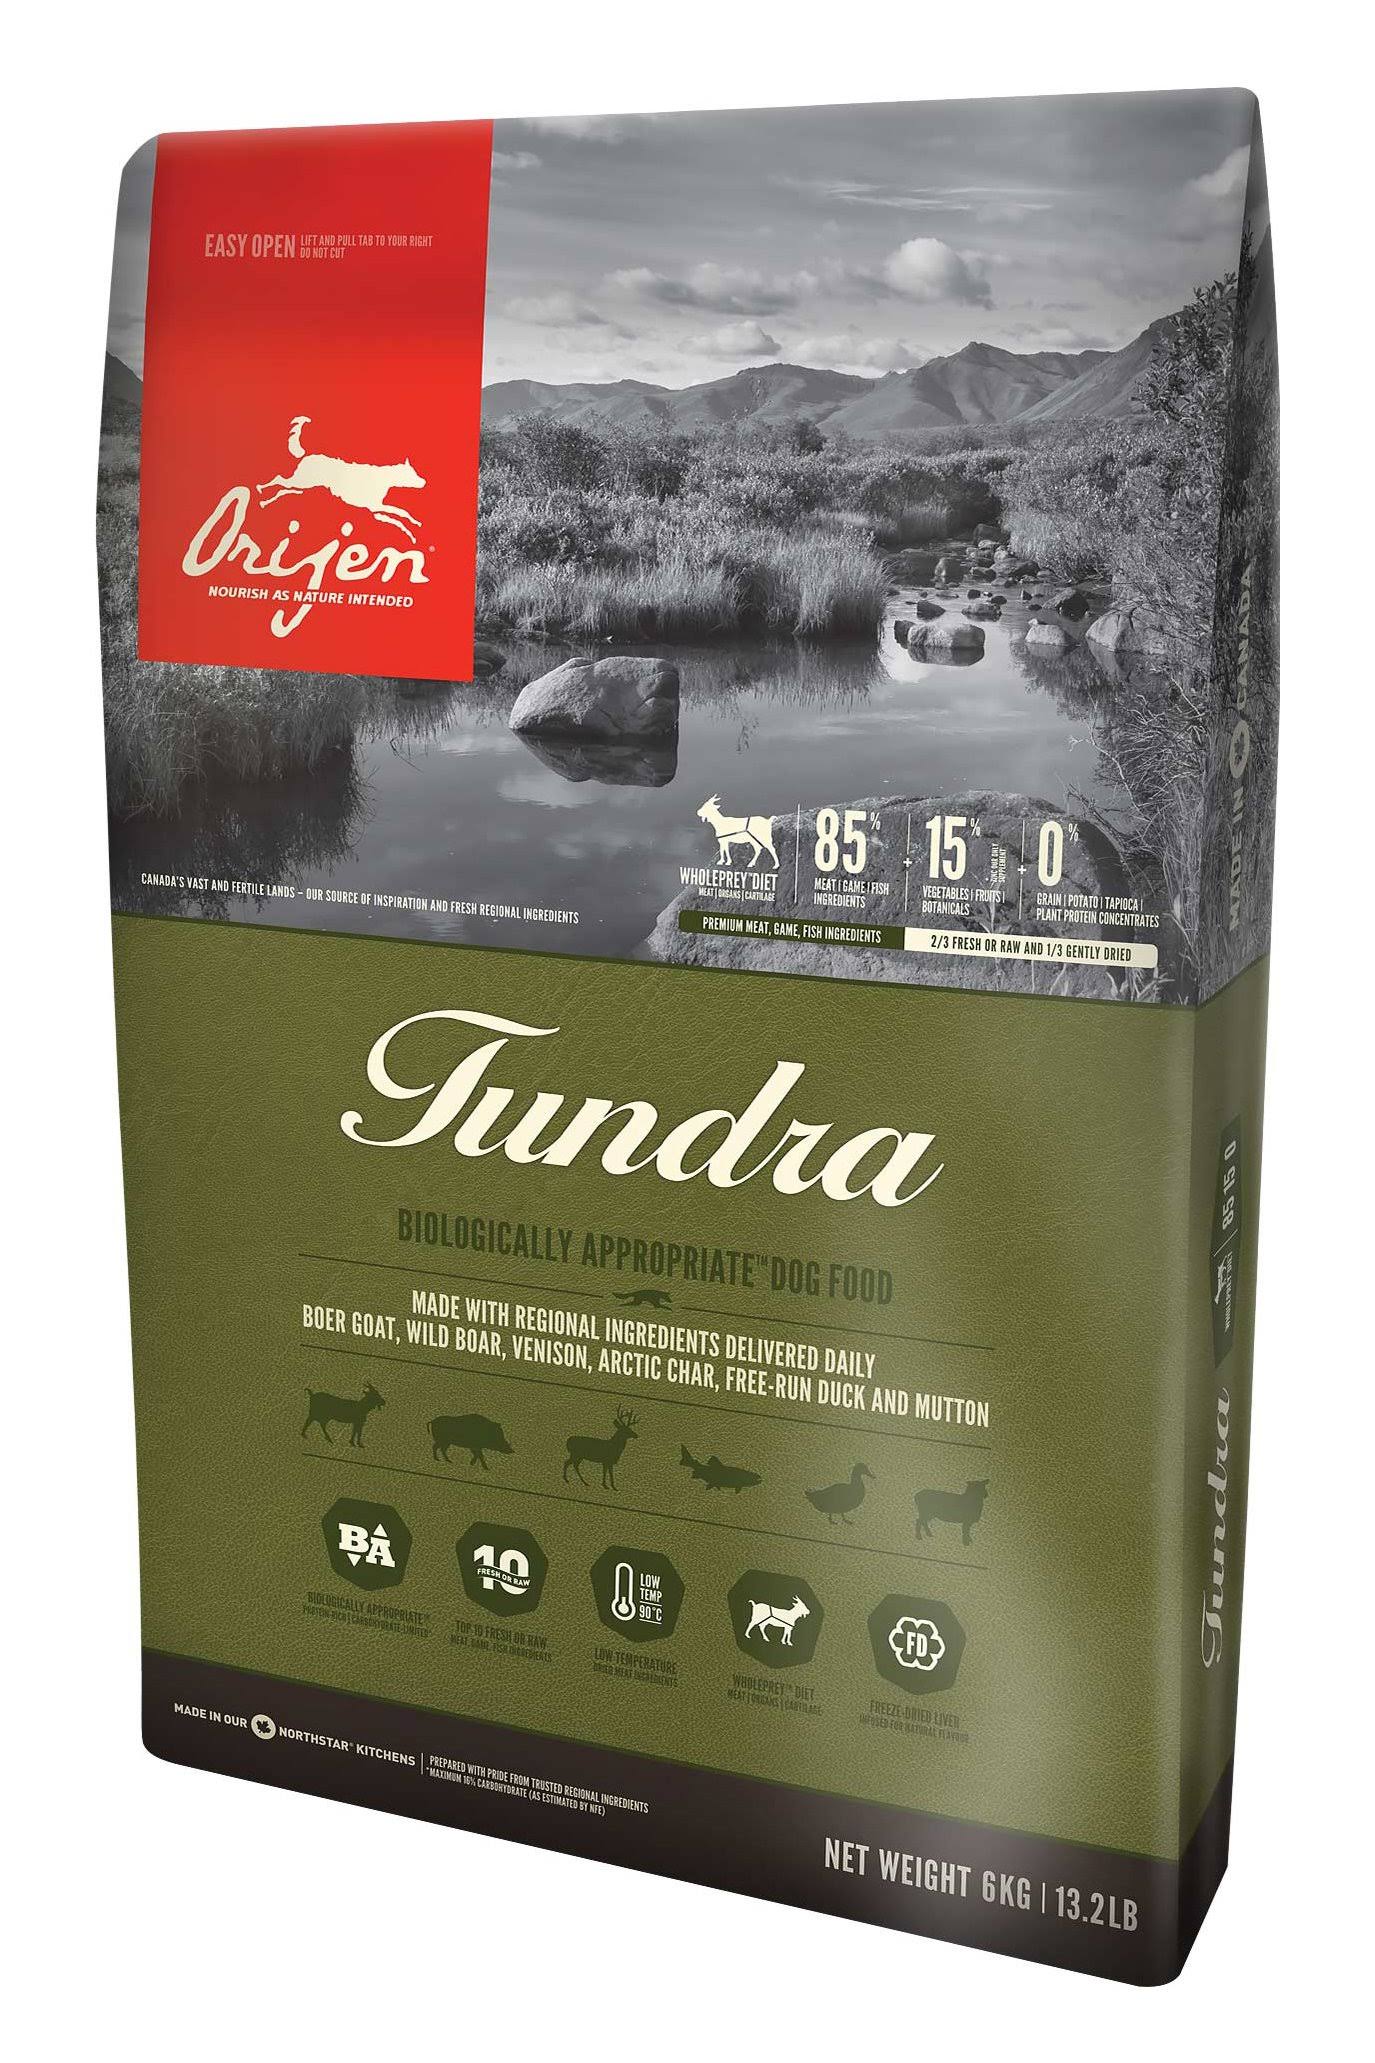 Orijen Tundra Grain-Free Dry Dog Food - 25 lb. Bag